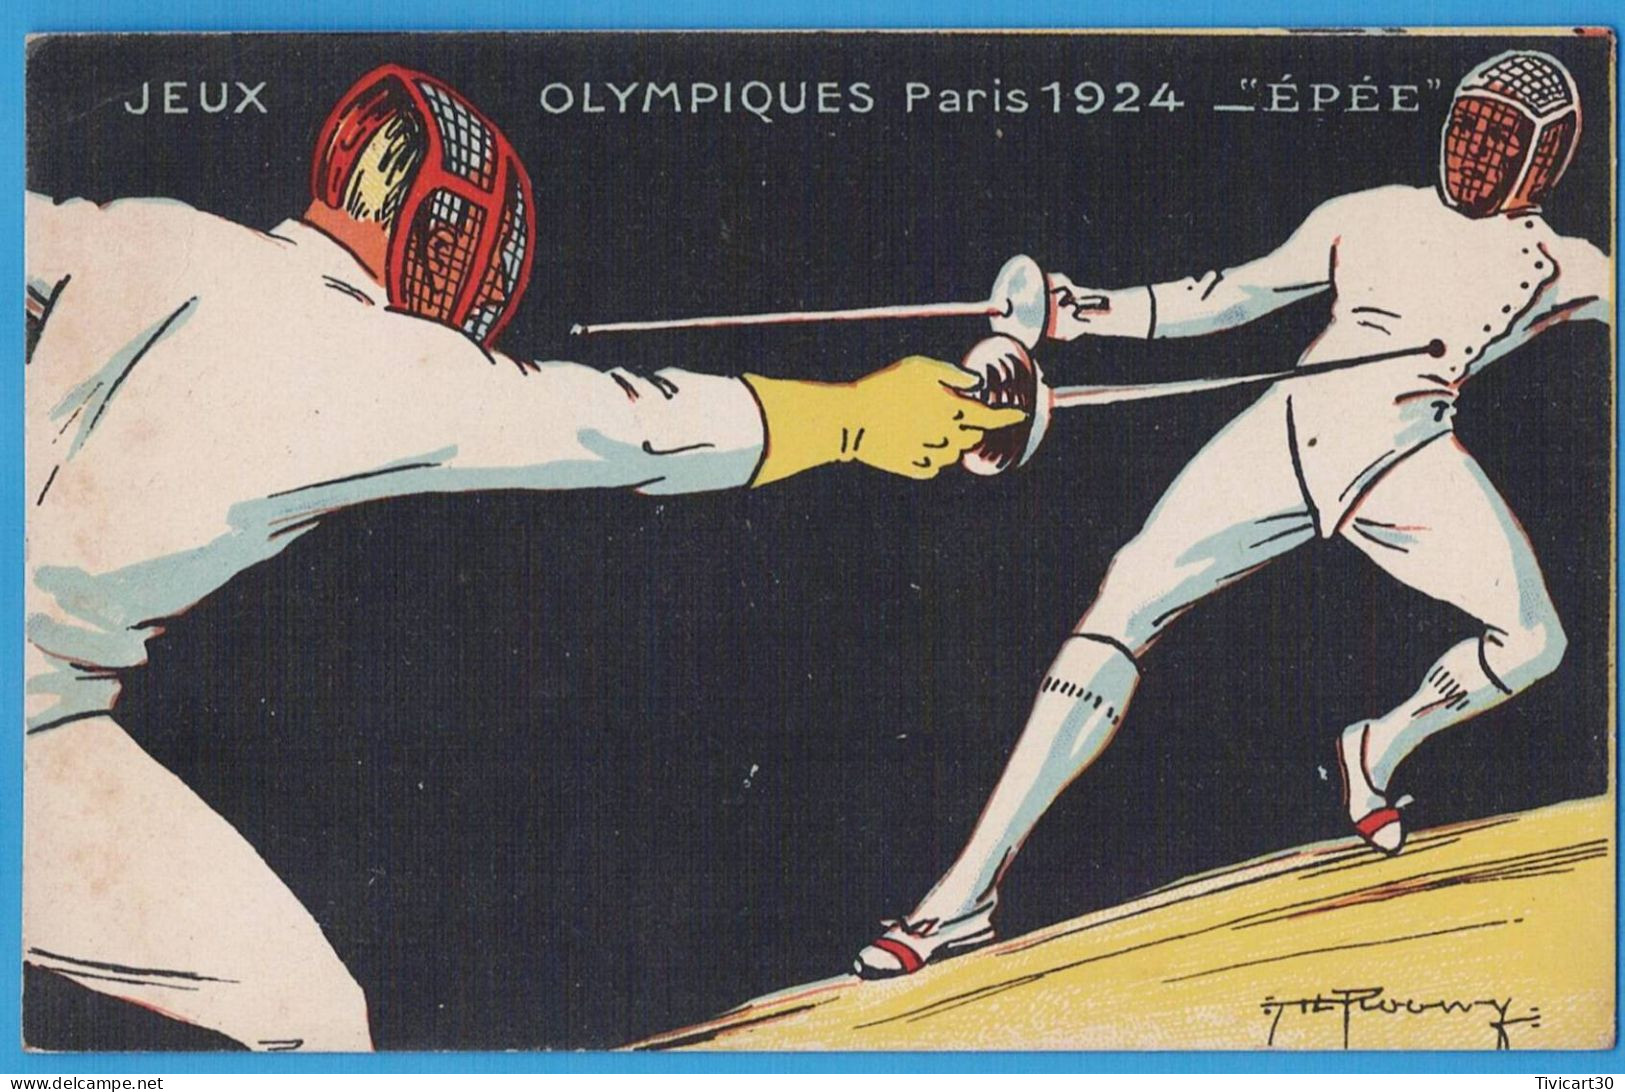 CPA JEUX OLYMPIQUES PARIS 1924 - EPEE - ILLUSTRATEUR ROOWEY - COLLECTION KOLARSINE ET SOLUTION PAUTAUBERGE - Olympische Spiele